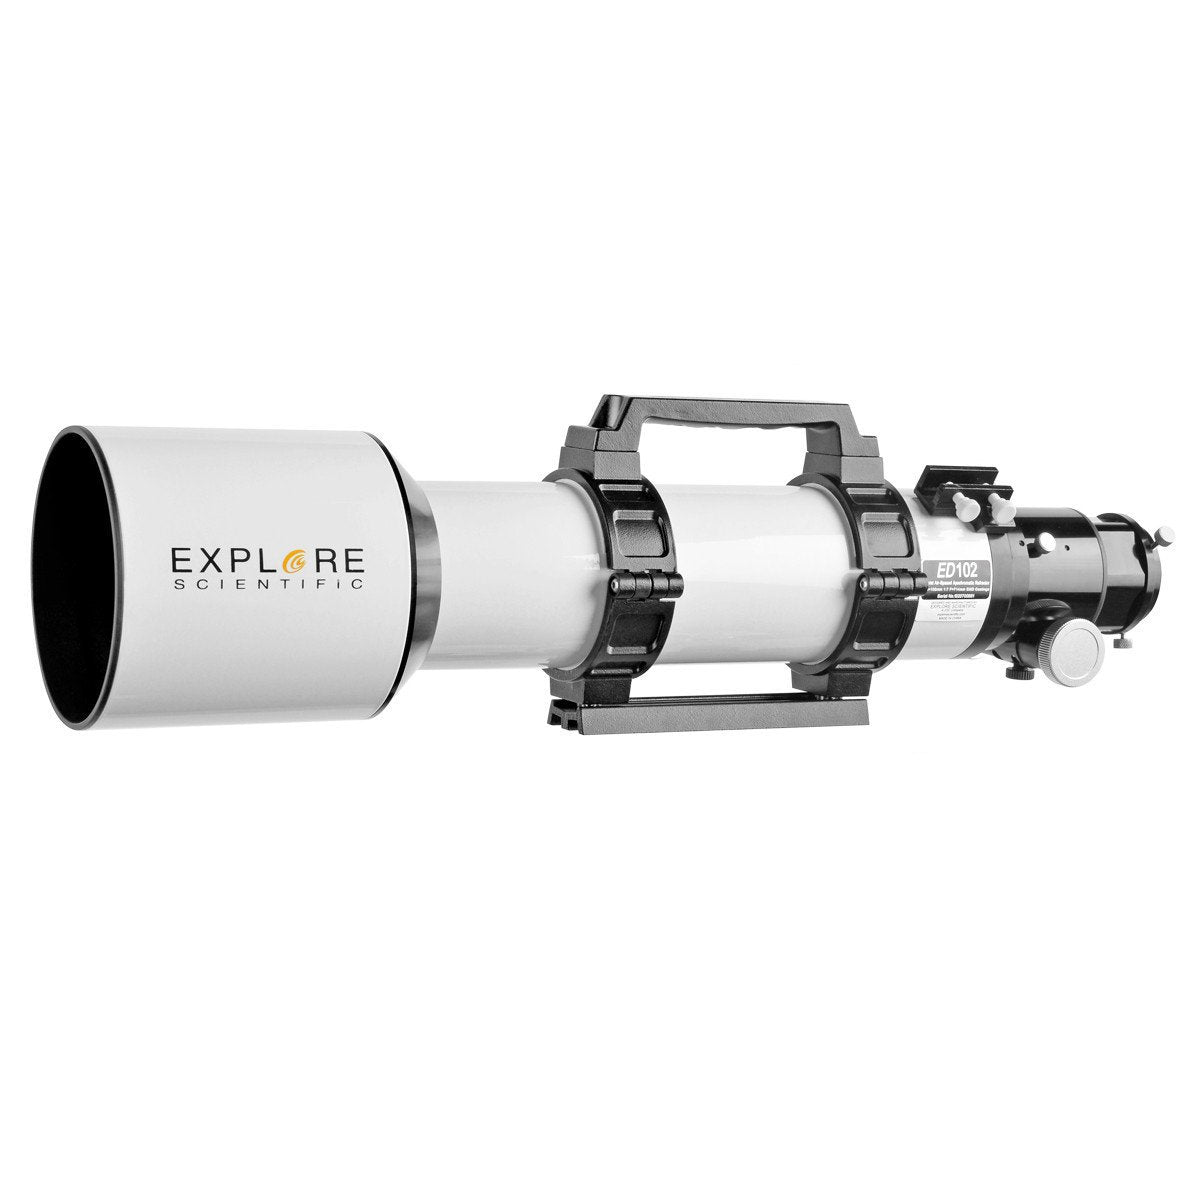 ED102mm-FCD100 Air Spaced Triplet Refractor Telescope FCD100-10207-02